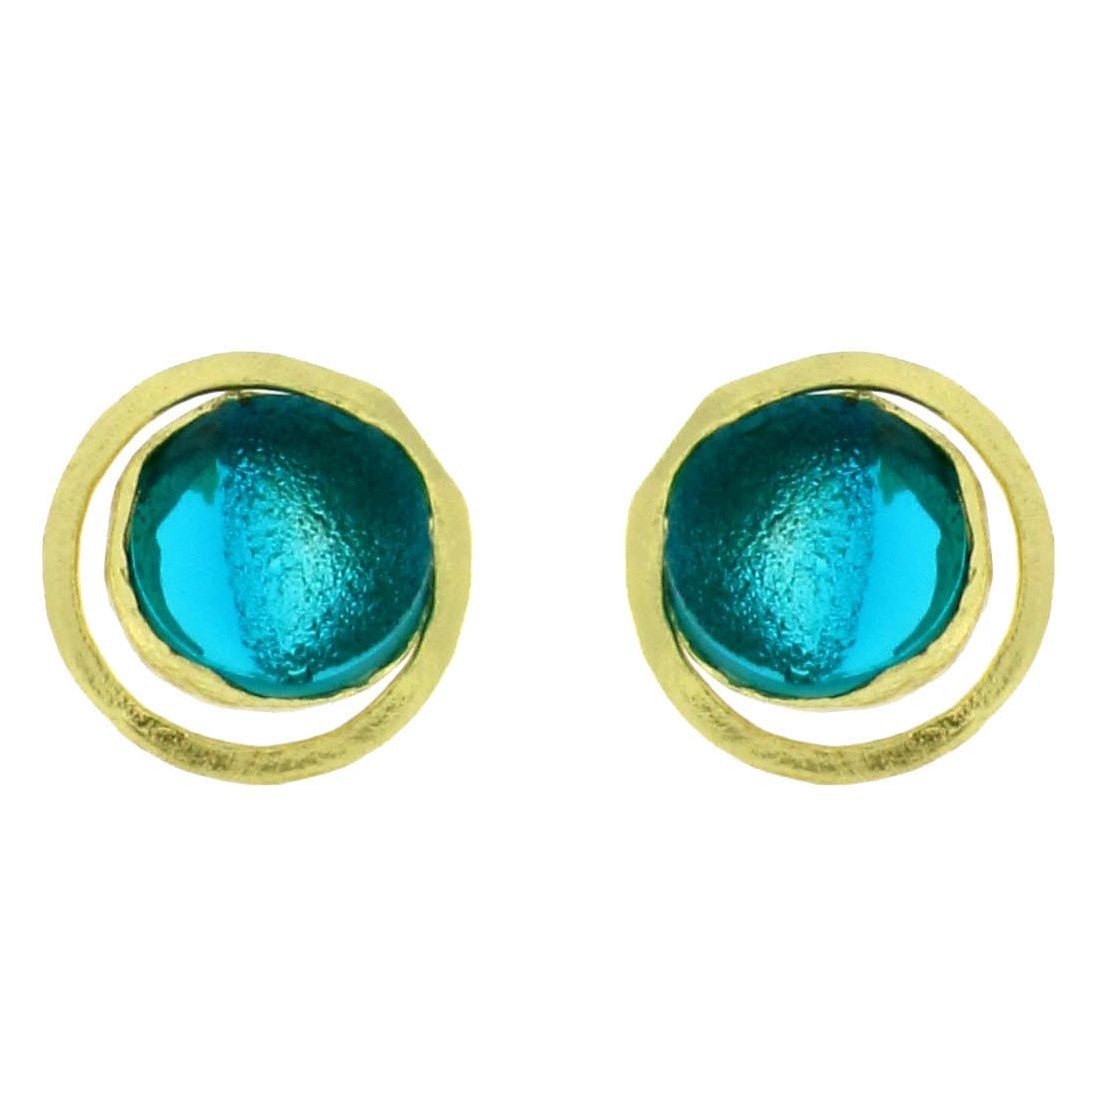 Blue Resin Earrings - The Nancy Smillie Shop - Art, Jewellery & Designer Gifts Glasgow